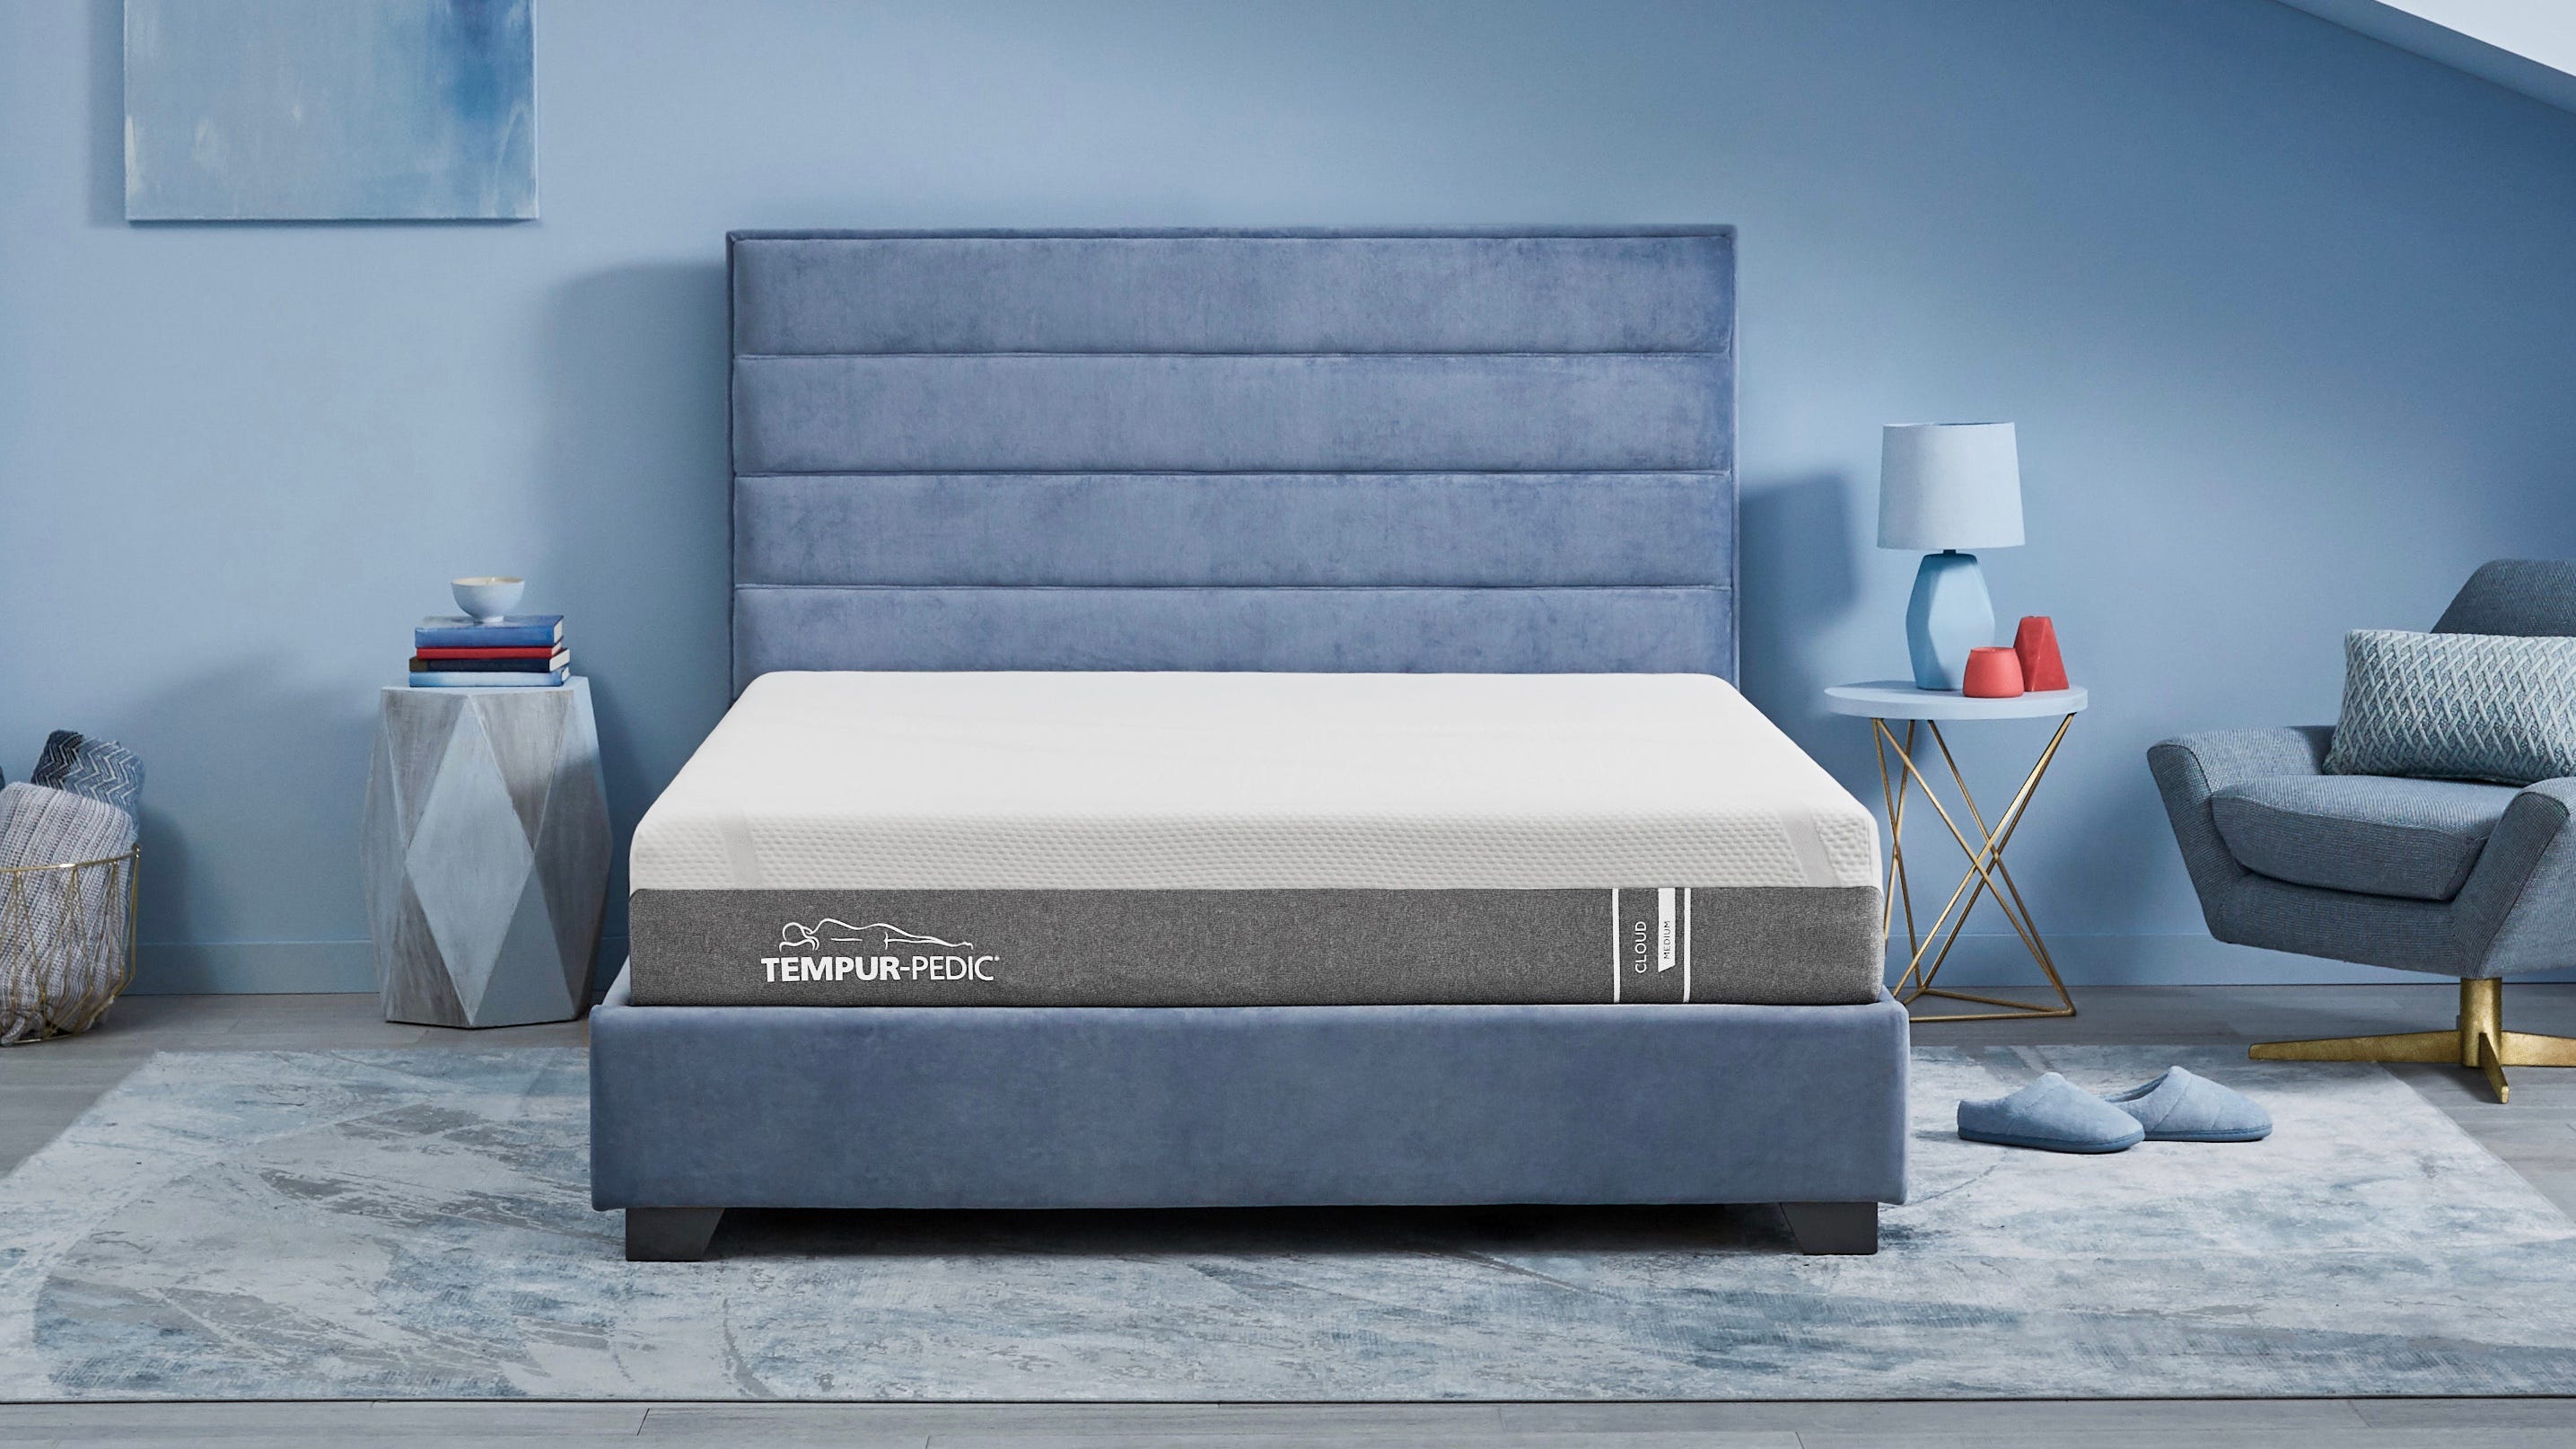 best place to buy a mattress online reddit